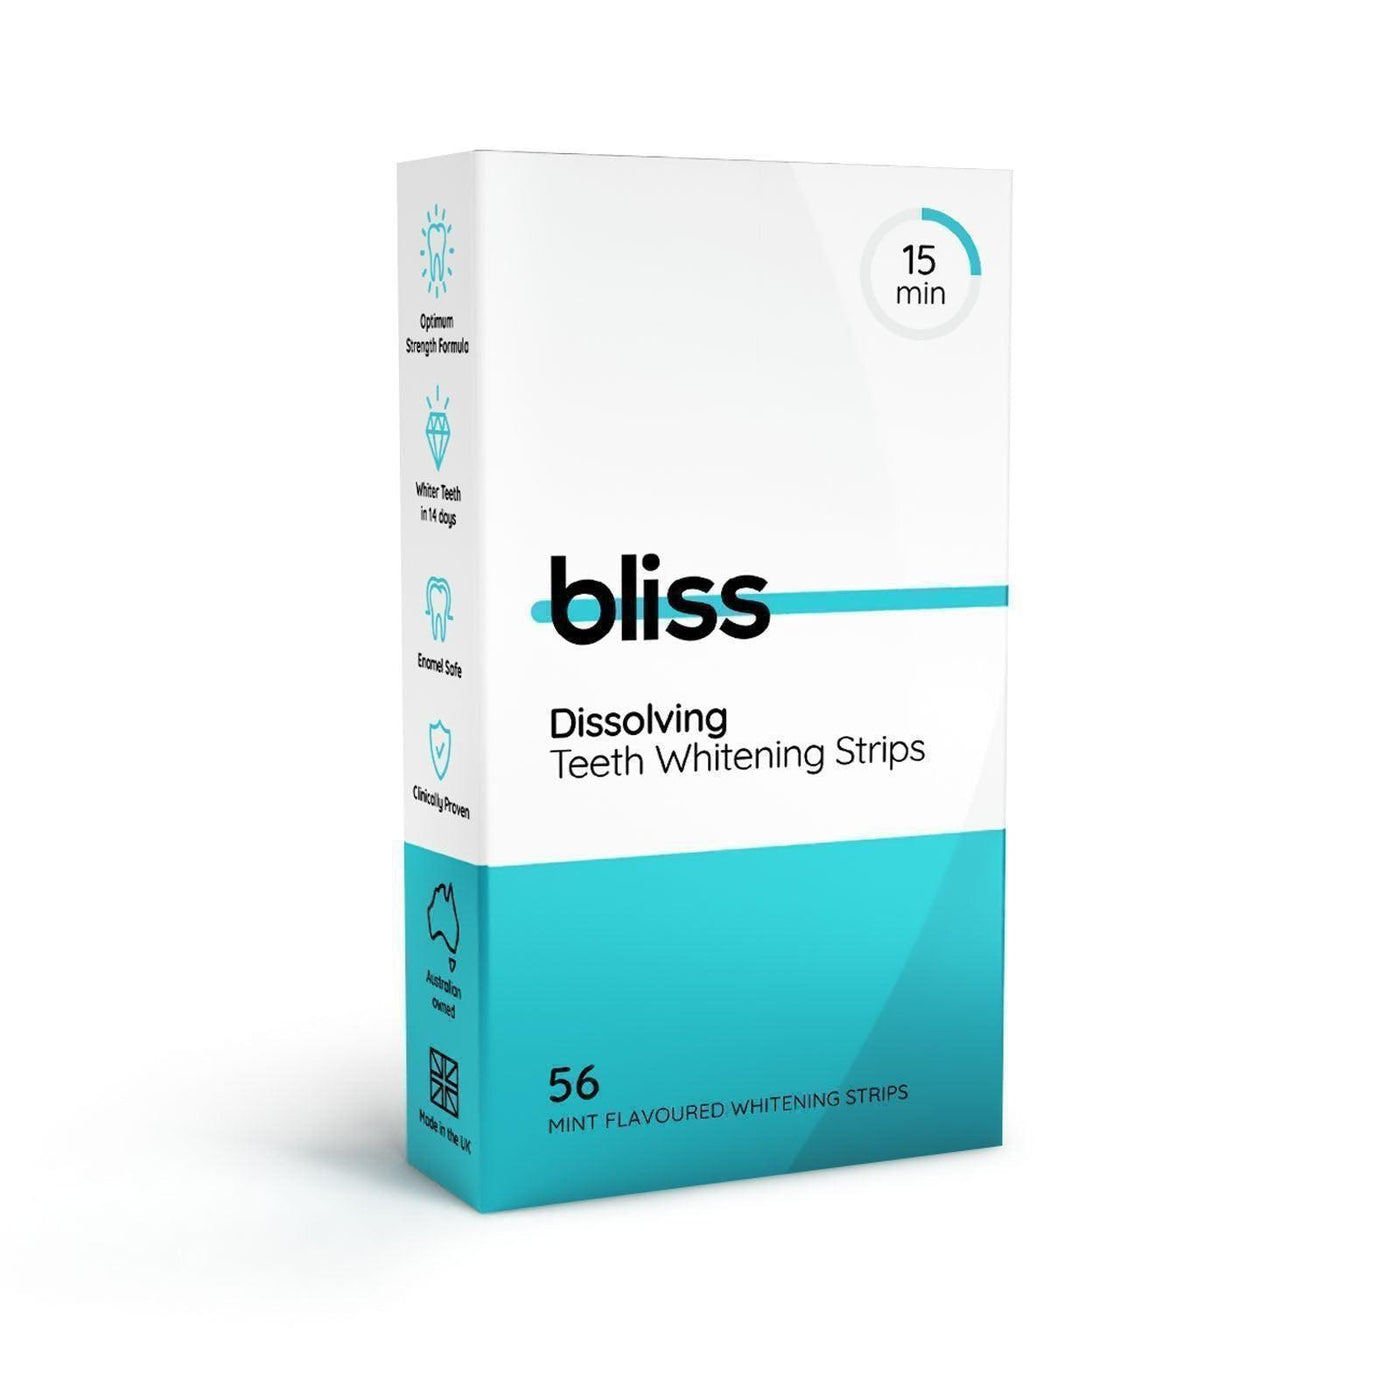 Dissolving Teeth Whitening Strips (56 Pack) Whitening Strips Bliss Oral Care   